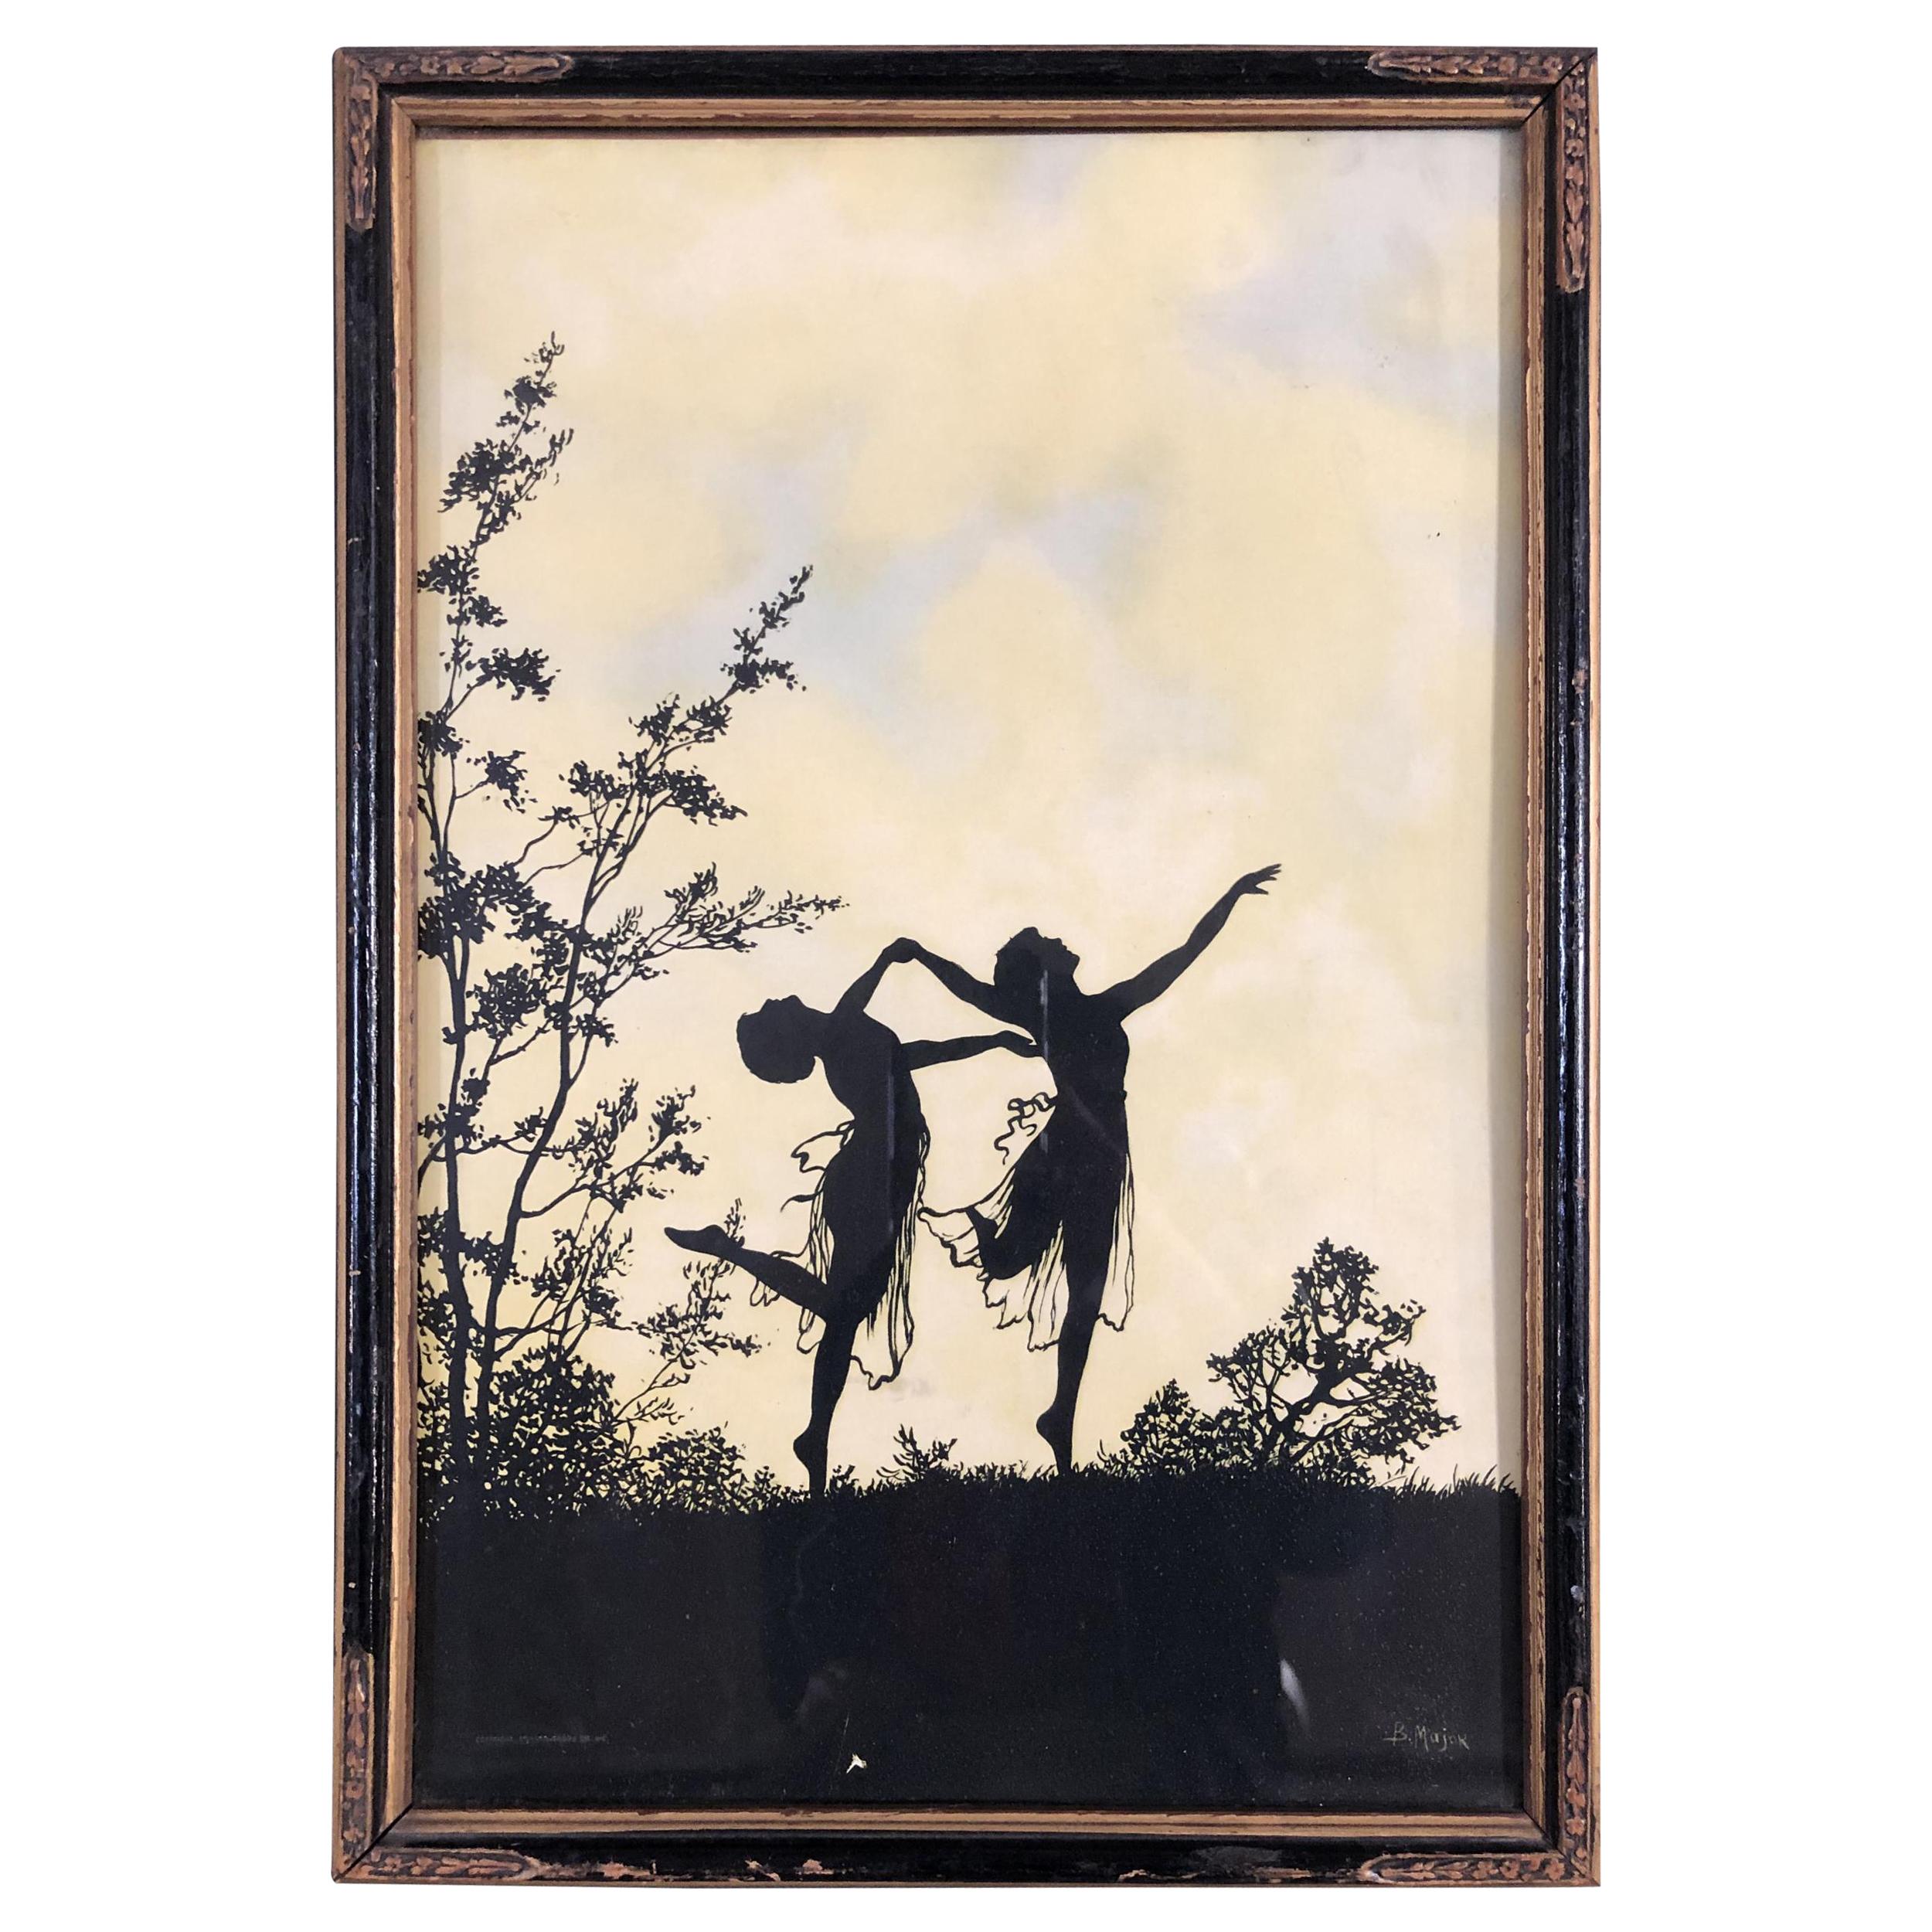 Silhouette "The Four Seasons" Print in Original Frame by Fidus, circa 1900